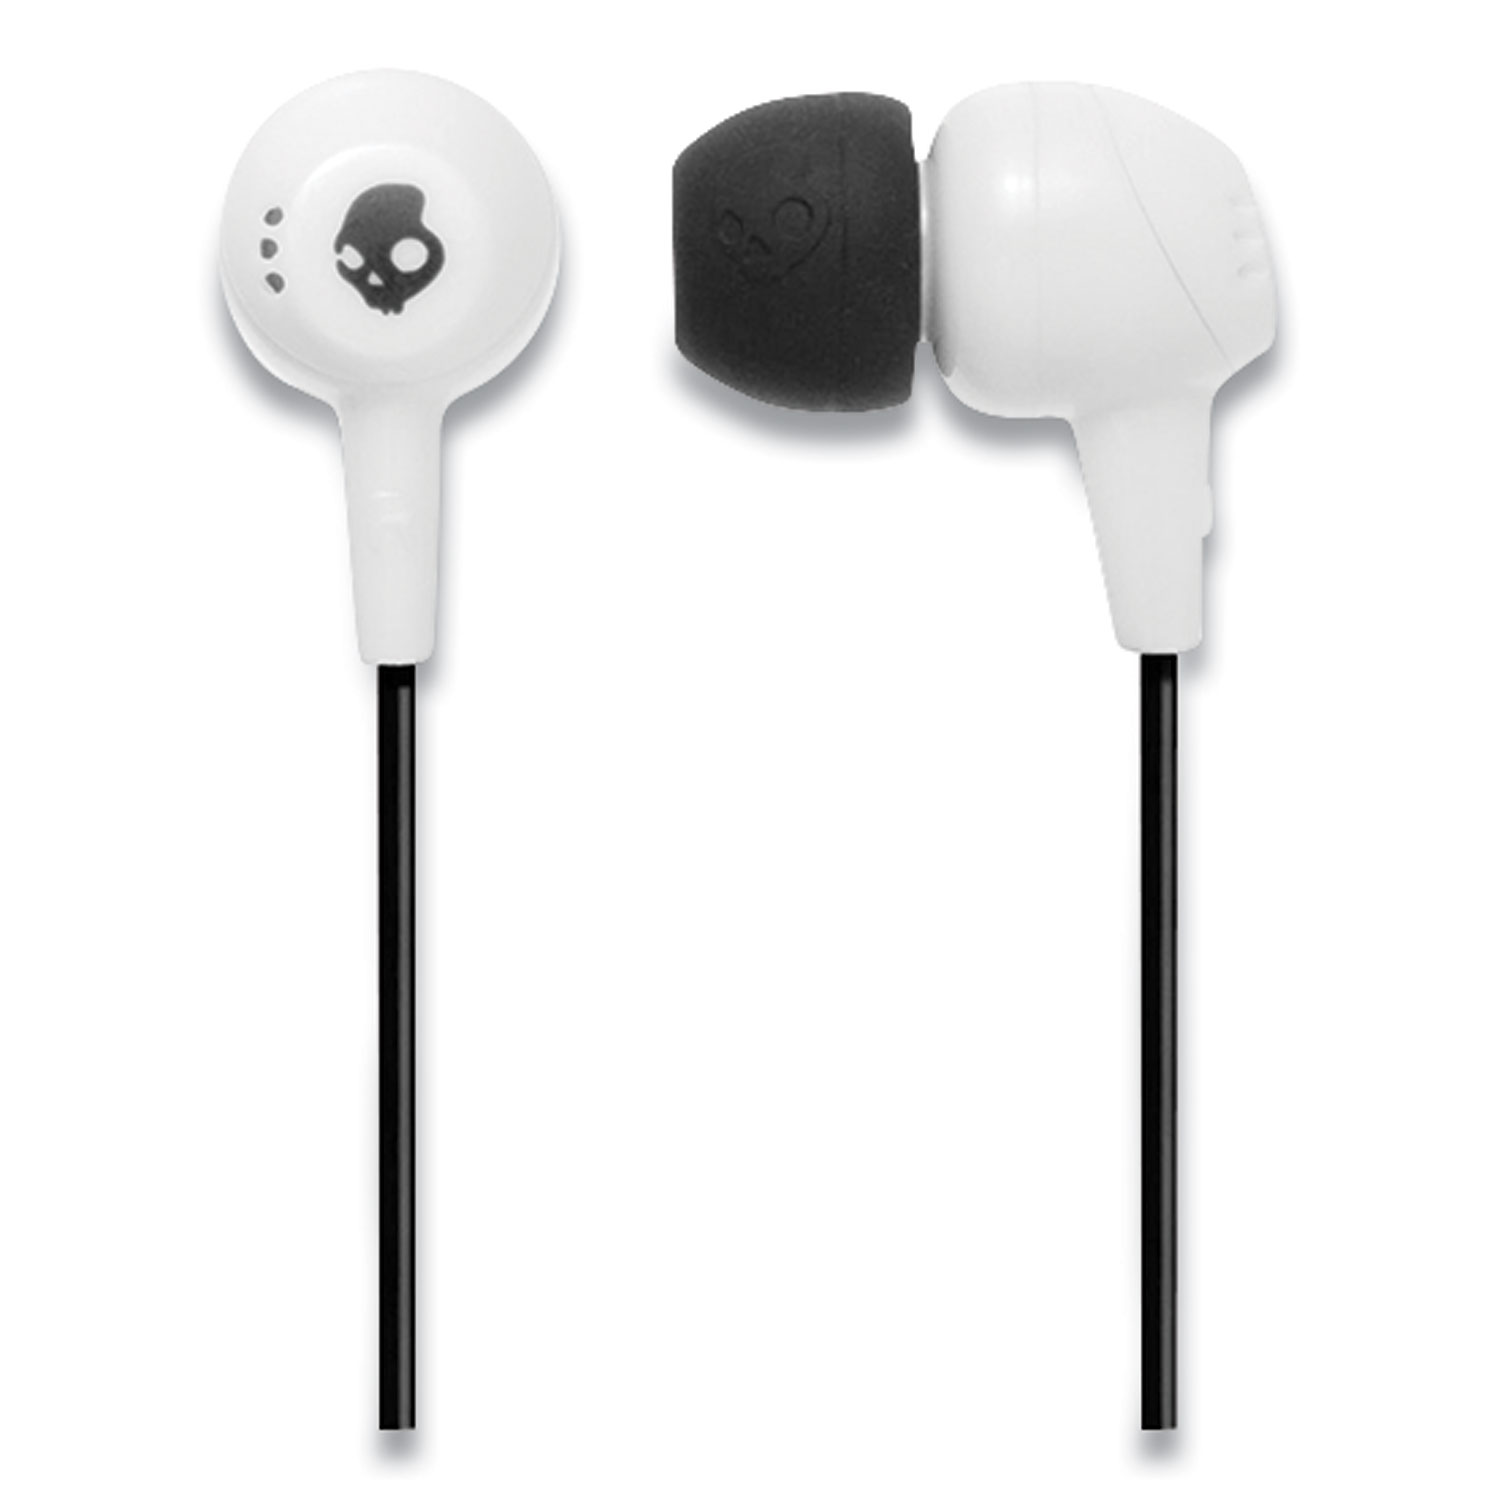  Skullcandy S2DUDZ-072 Jib In-Ear Headphones, White (SKA720408) 